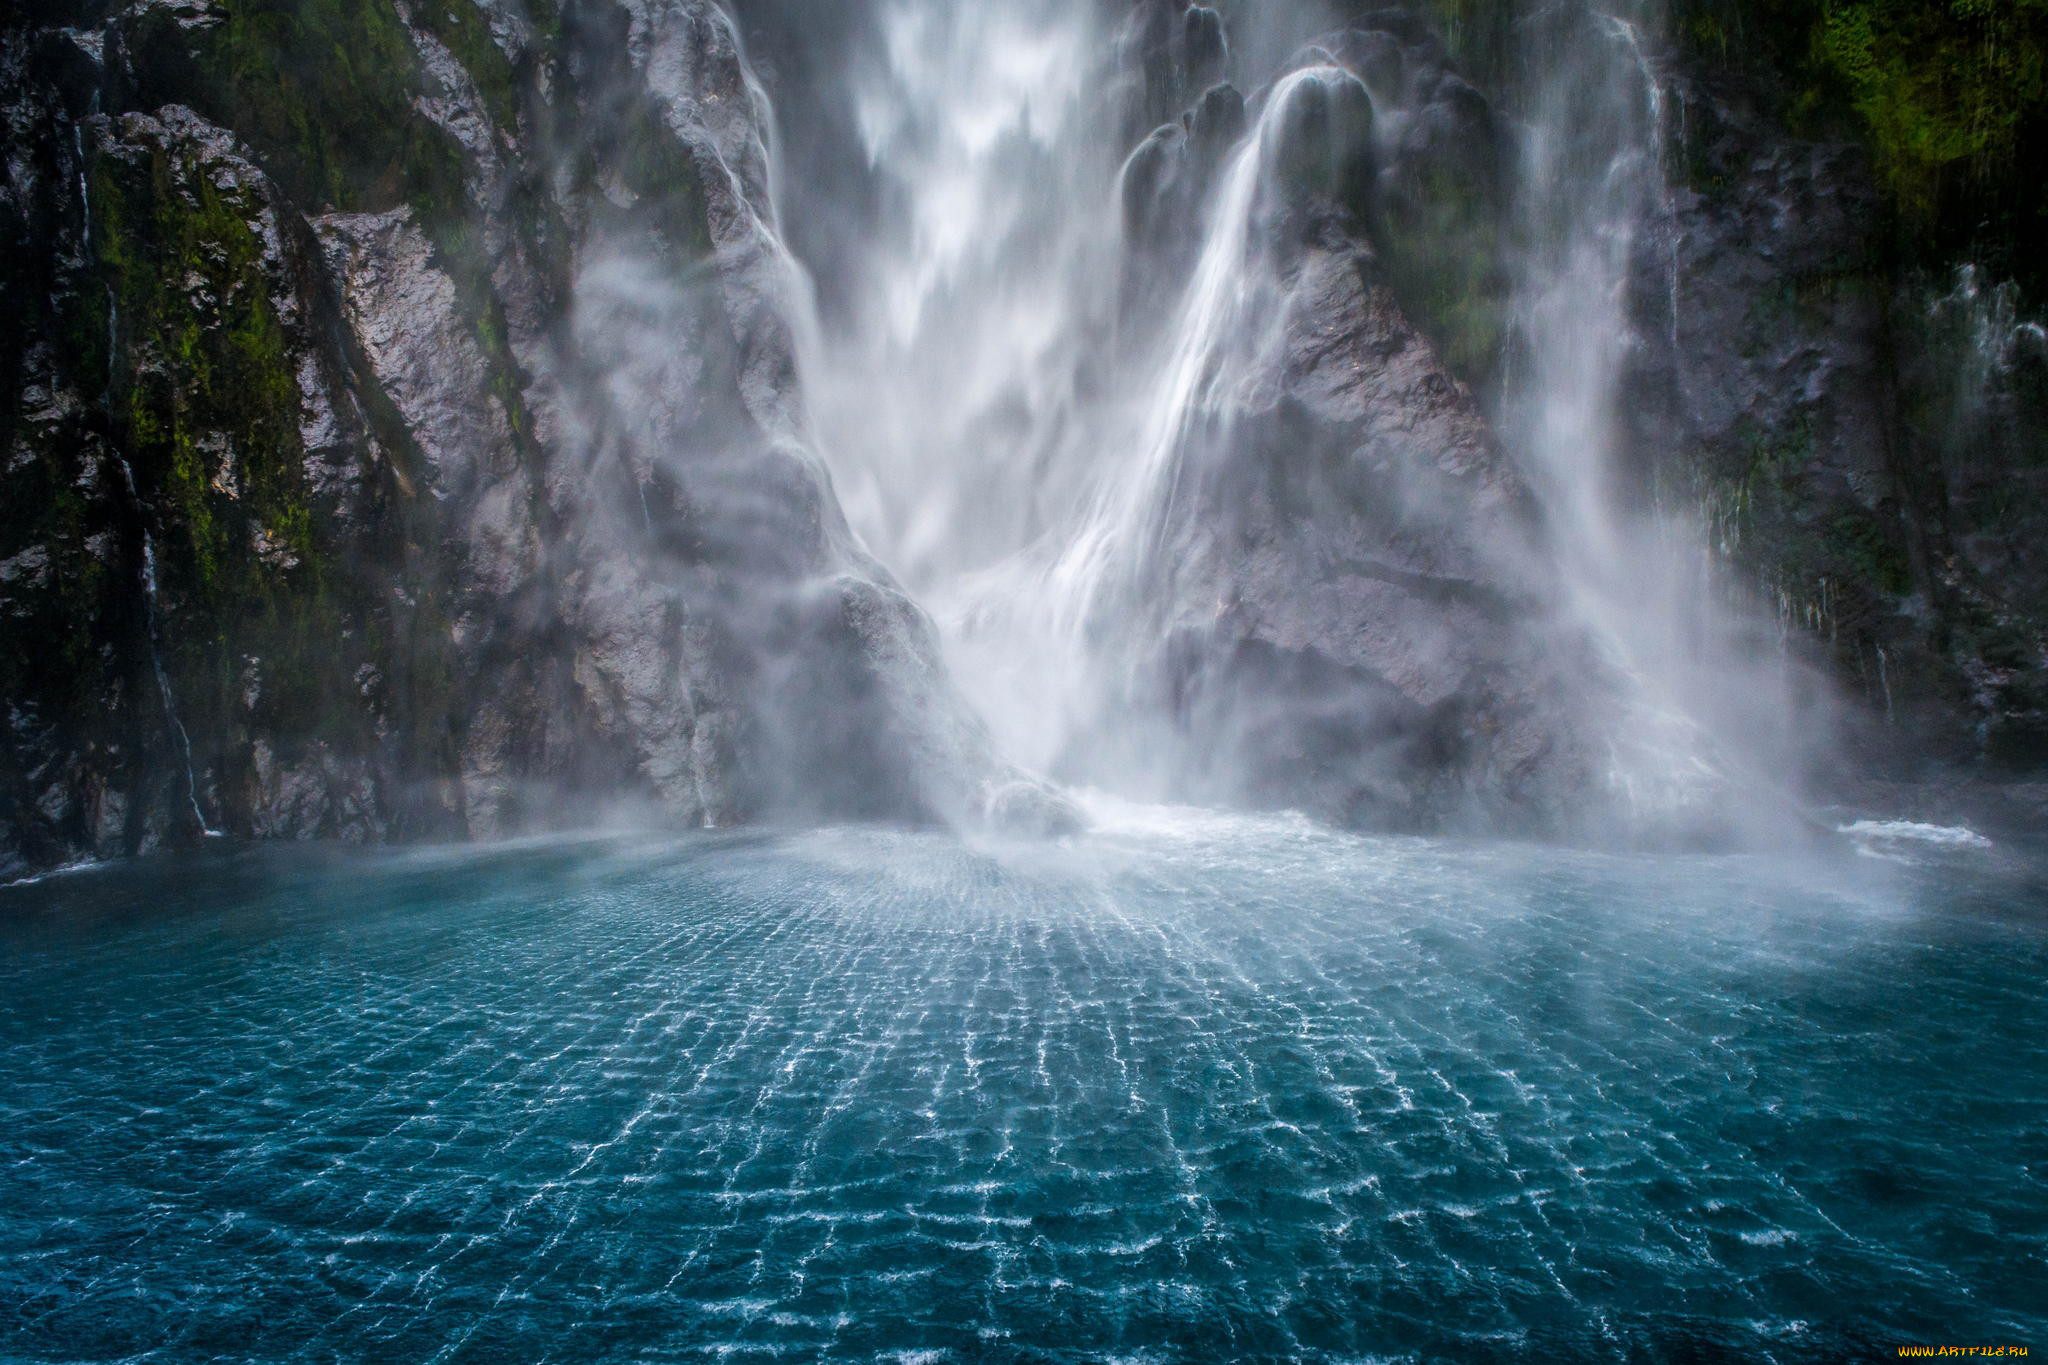 Картинки на телефон. Водопад « голубая Лагуна» ( г.холм). Милфорд саунд обратные водопады. Водопад Фэнго. Водопад Нгалиема.